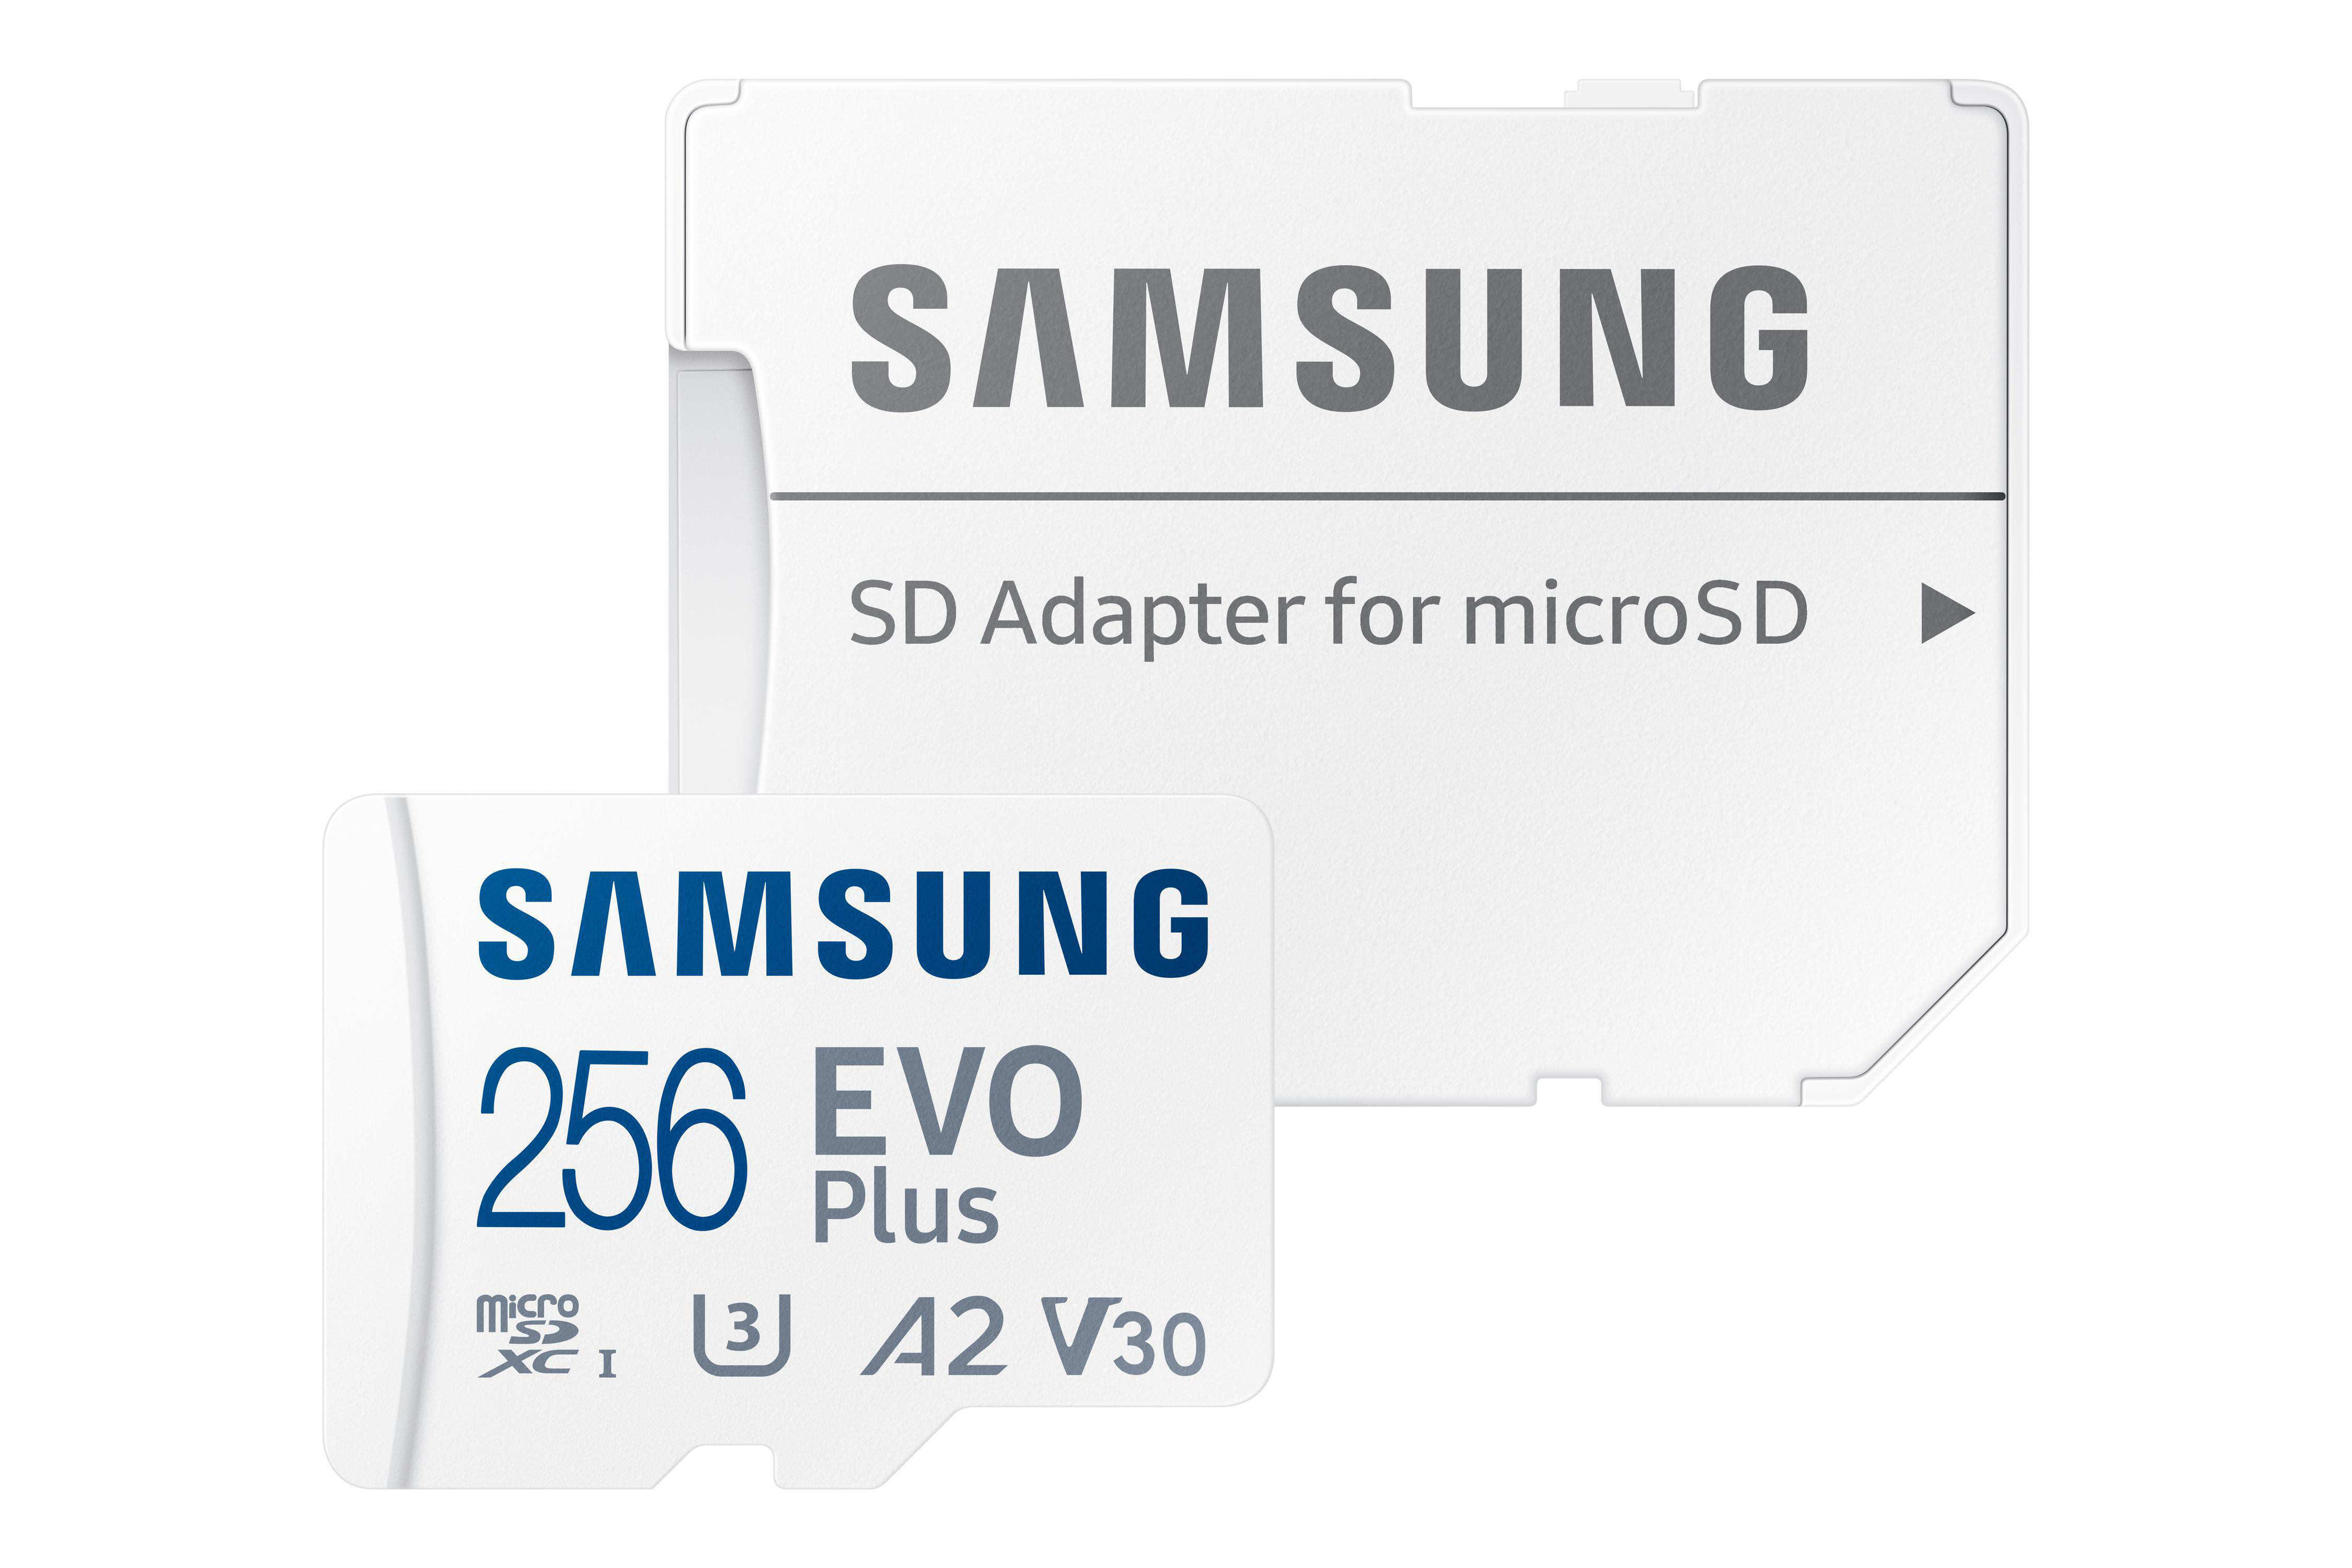 MB/s Speicherkarte, SAMSUNG EVO GB, 256 Micro-SDXC 130 Plus,